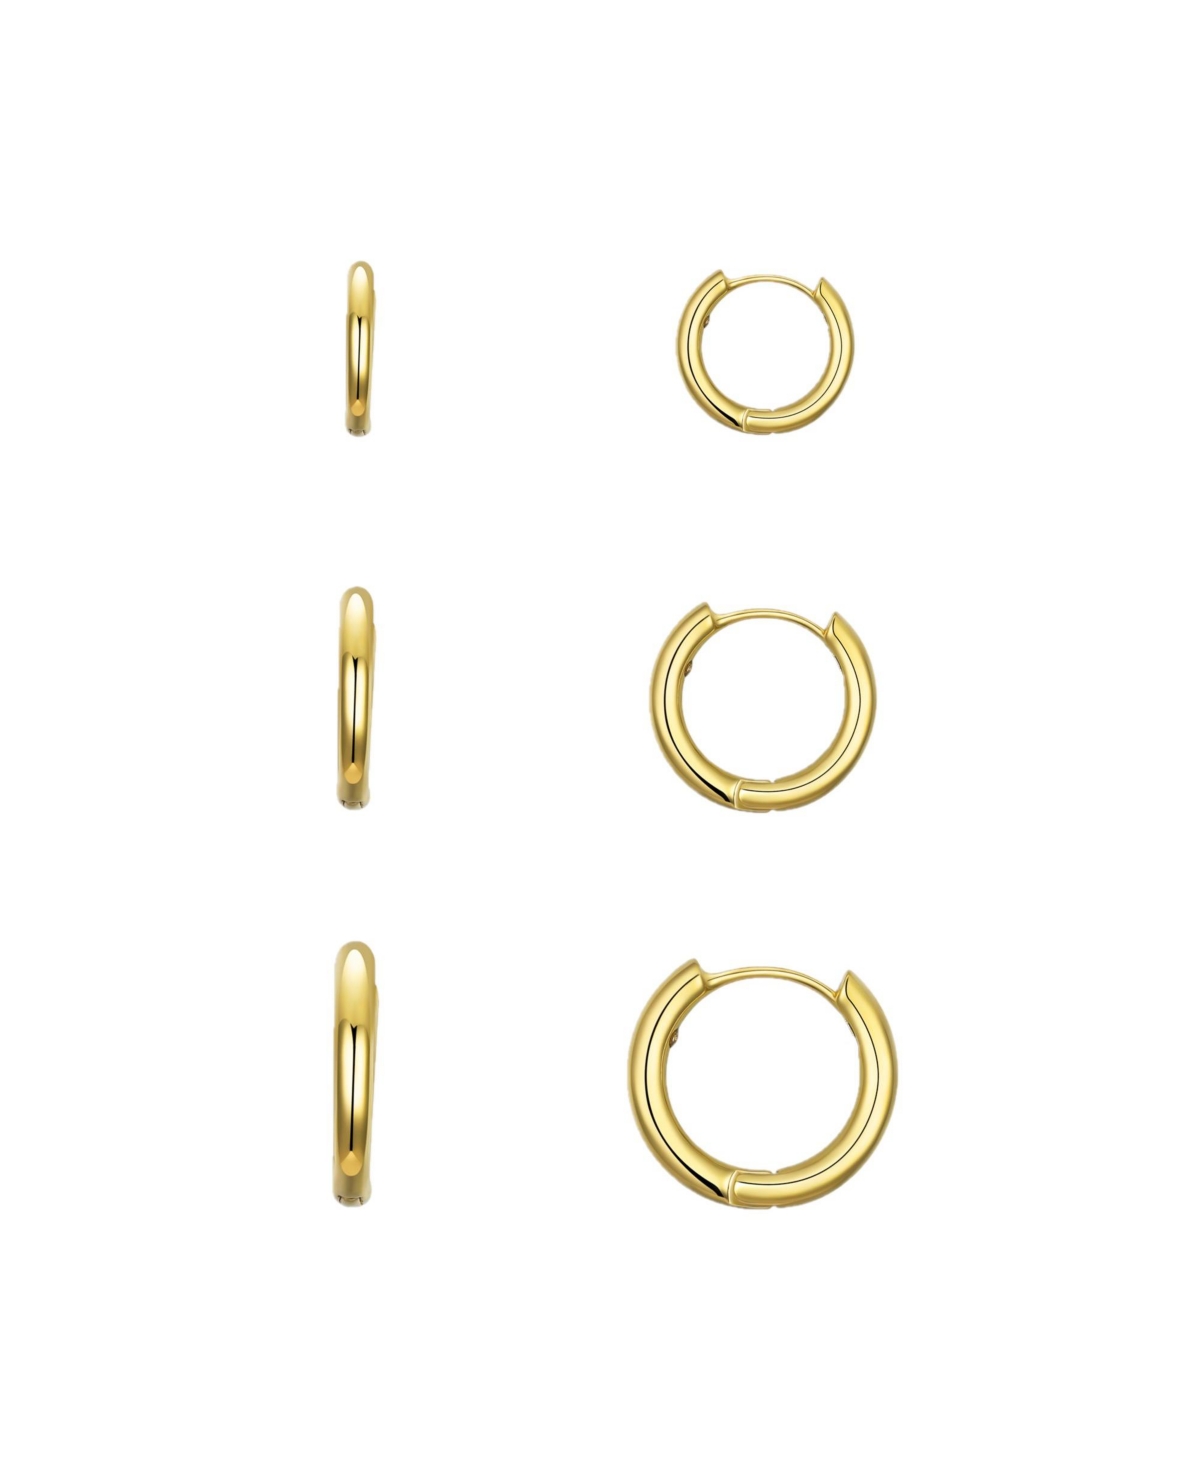 Modasport Silver-tone Or Gold-tone Stainless Steel Endless Hoop Earring Set